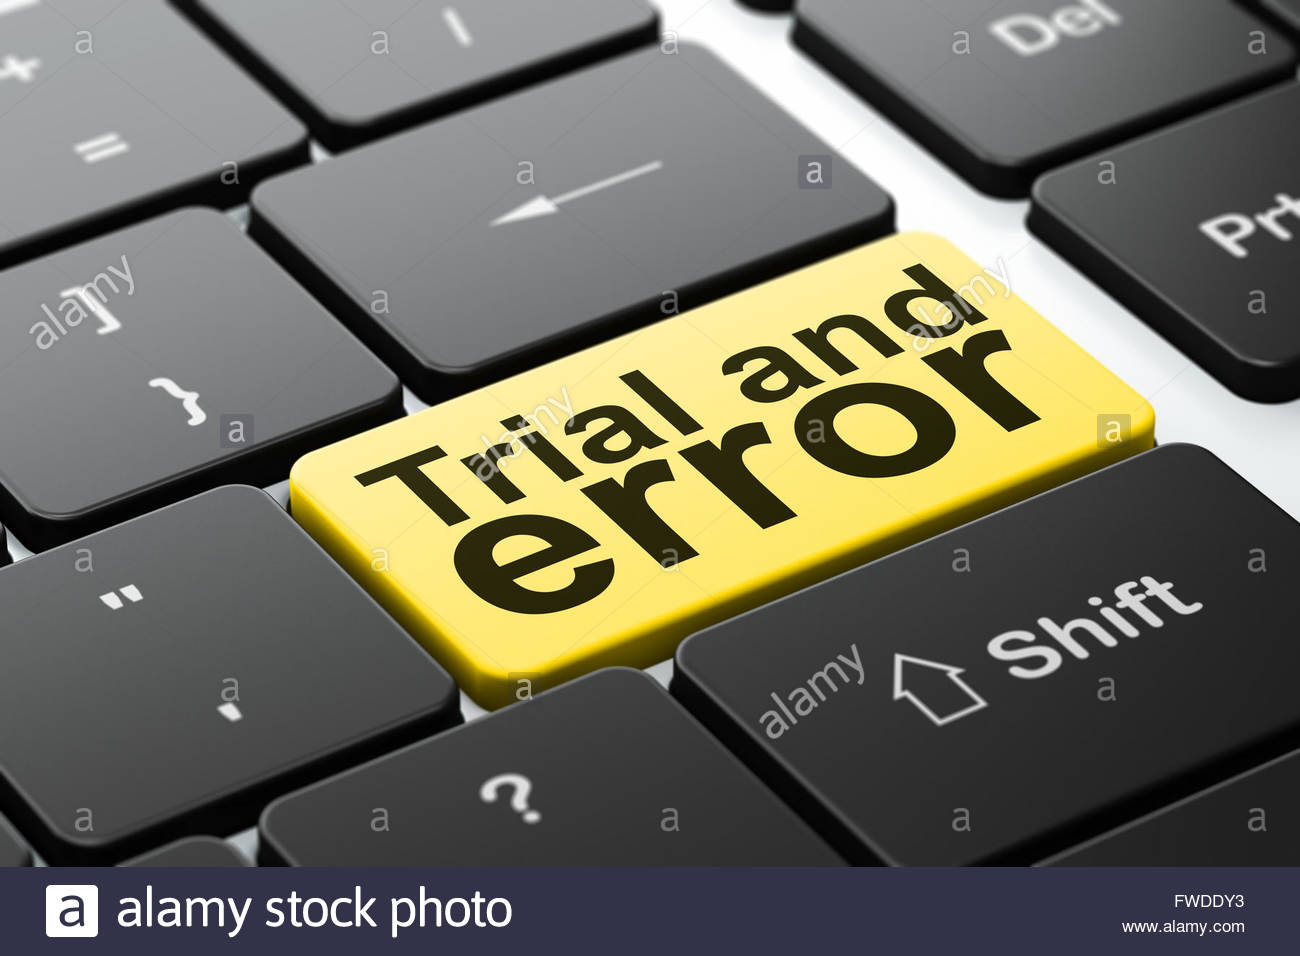 Trial & Error #3